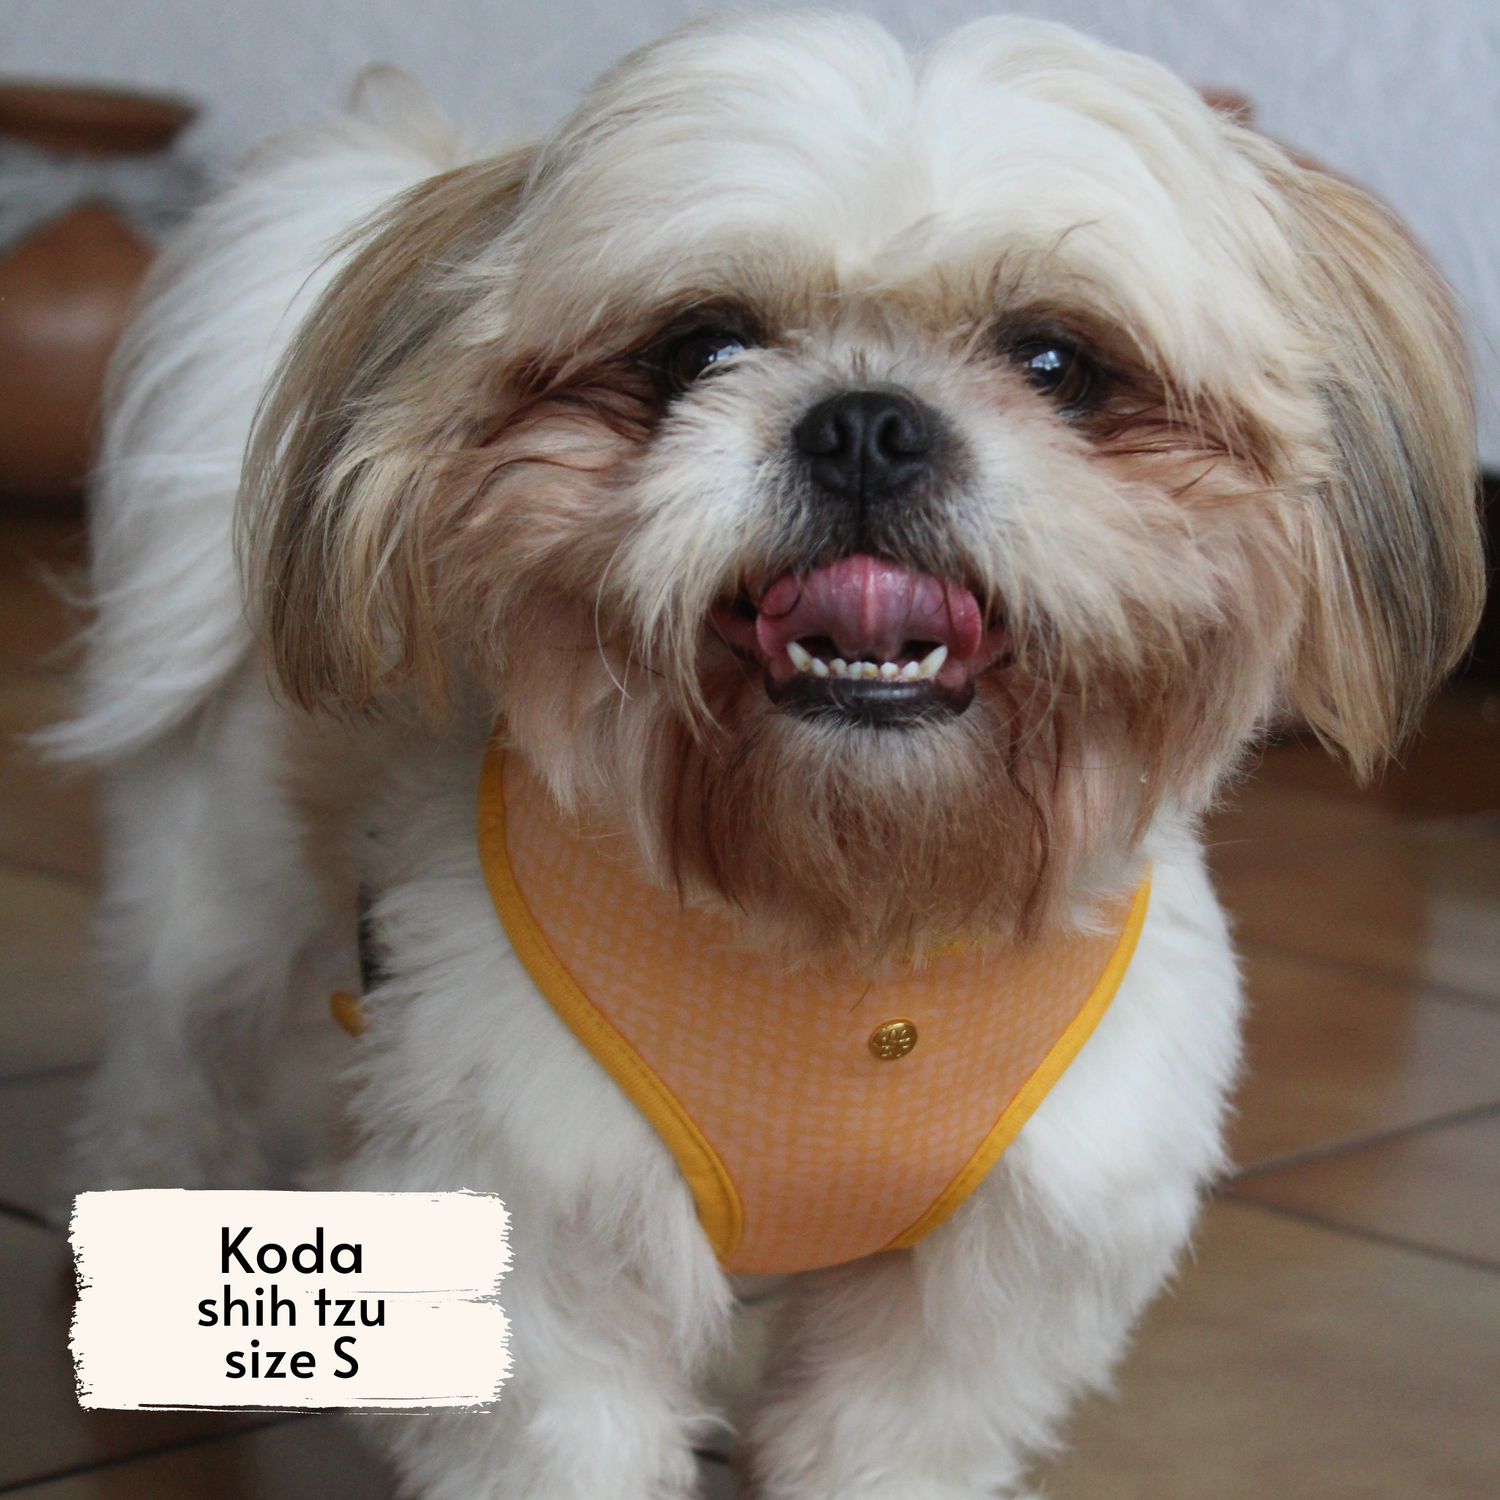 Pata Paw traveling pups harness as seen on a small dog, Koda, a shih tzu.